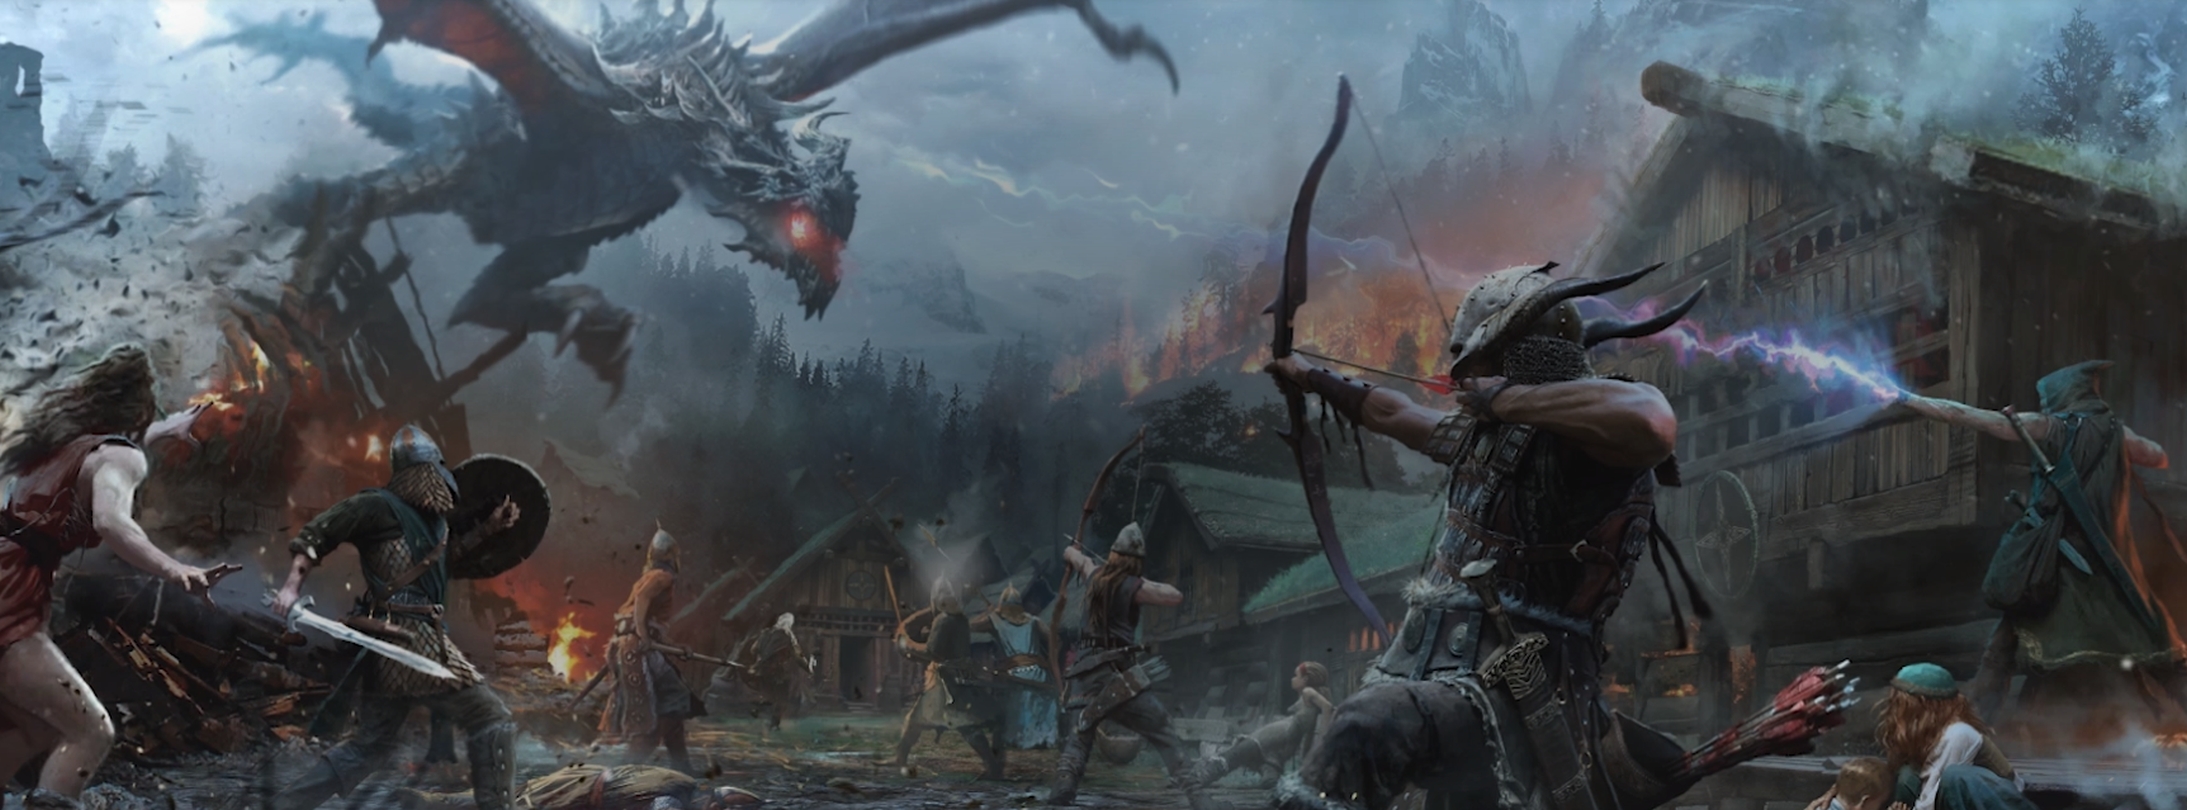 Bethesda Announces The Elder Scrolls: Legends Is No Longer In Development